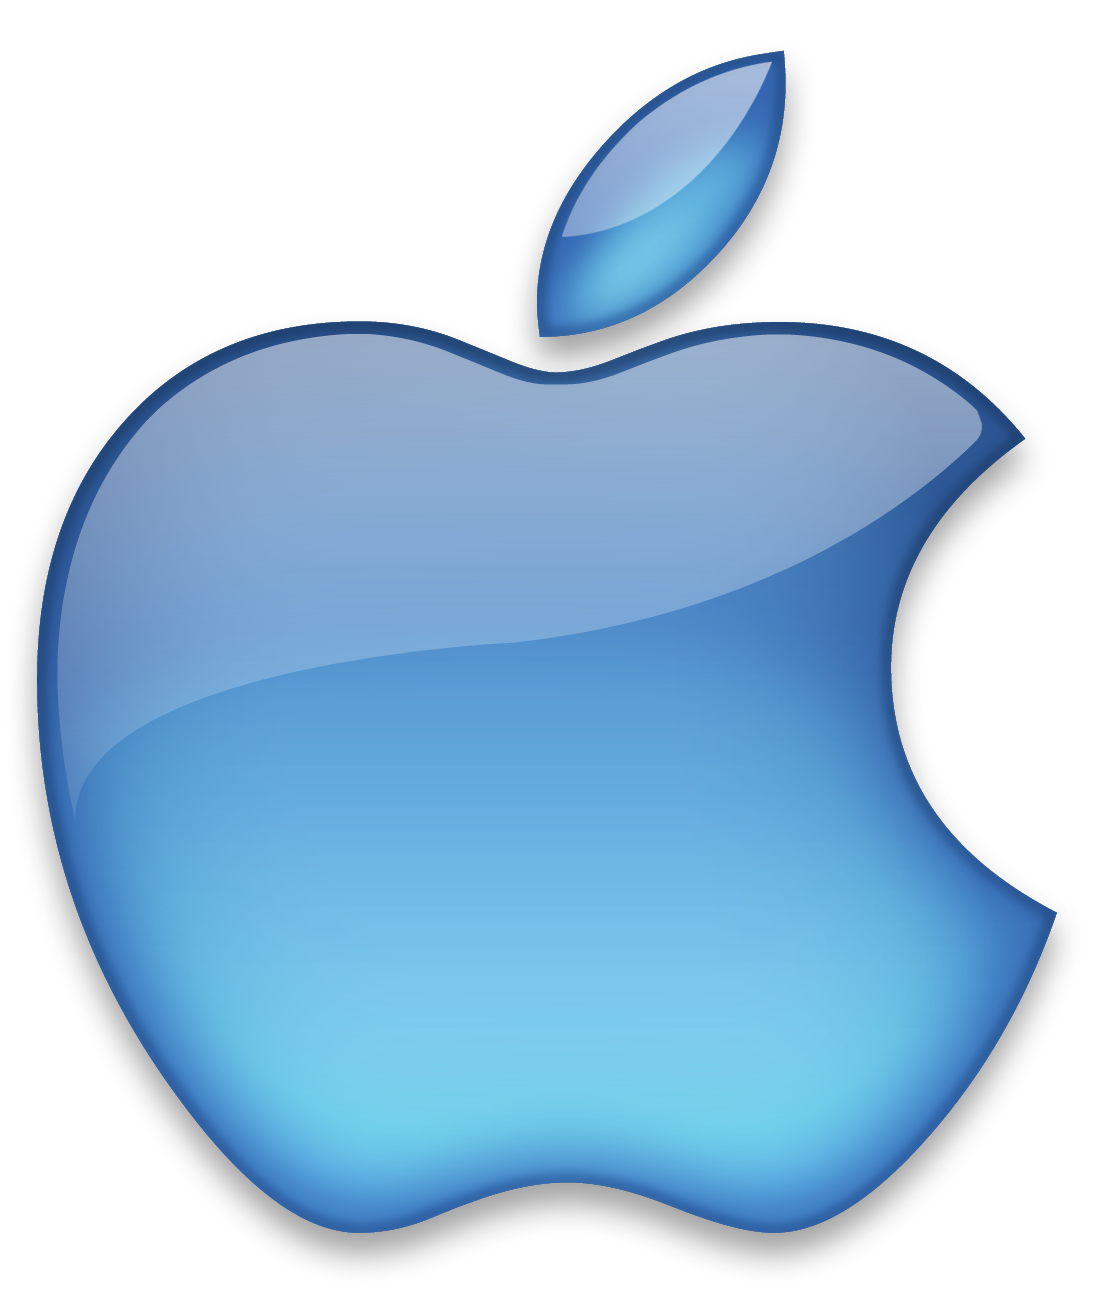 Apple Iphone Logo Wallpaper